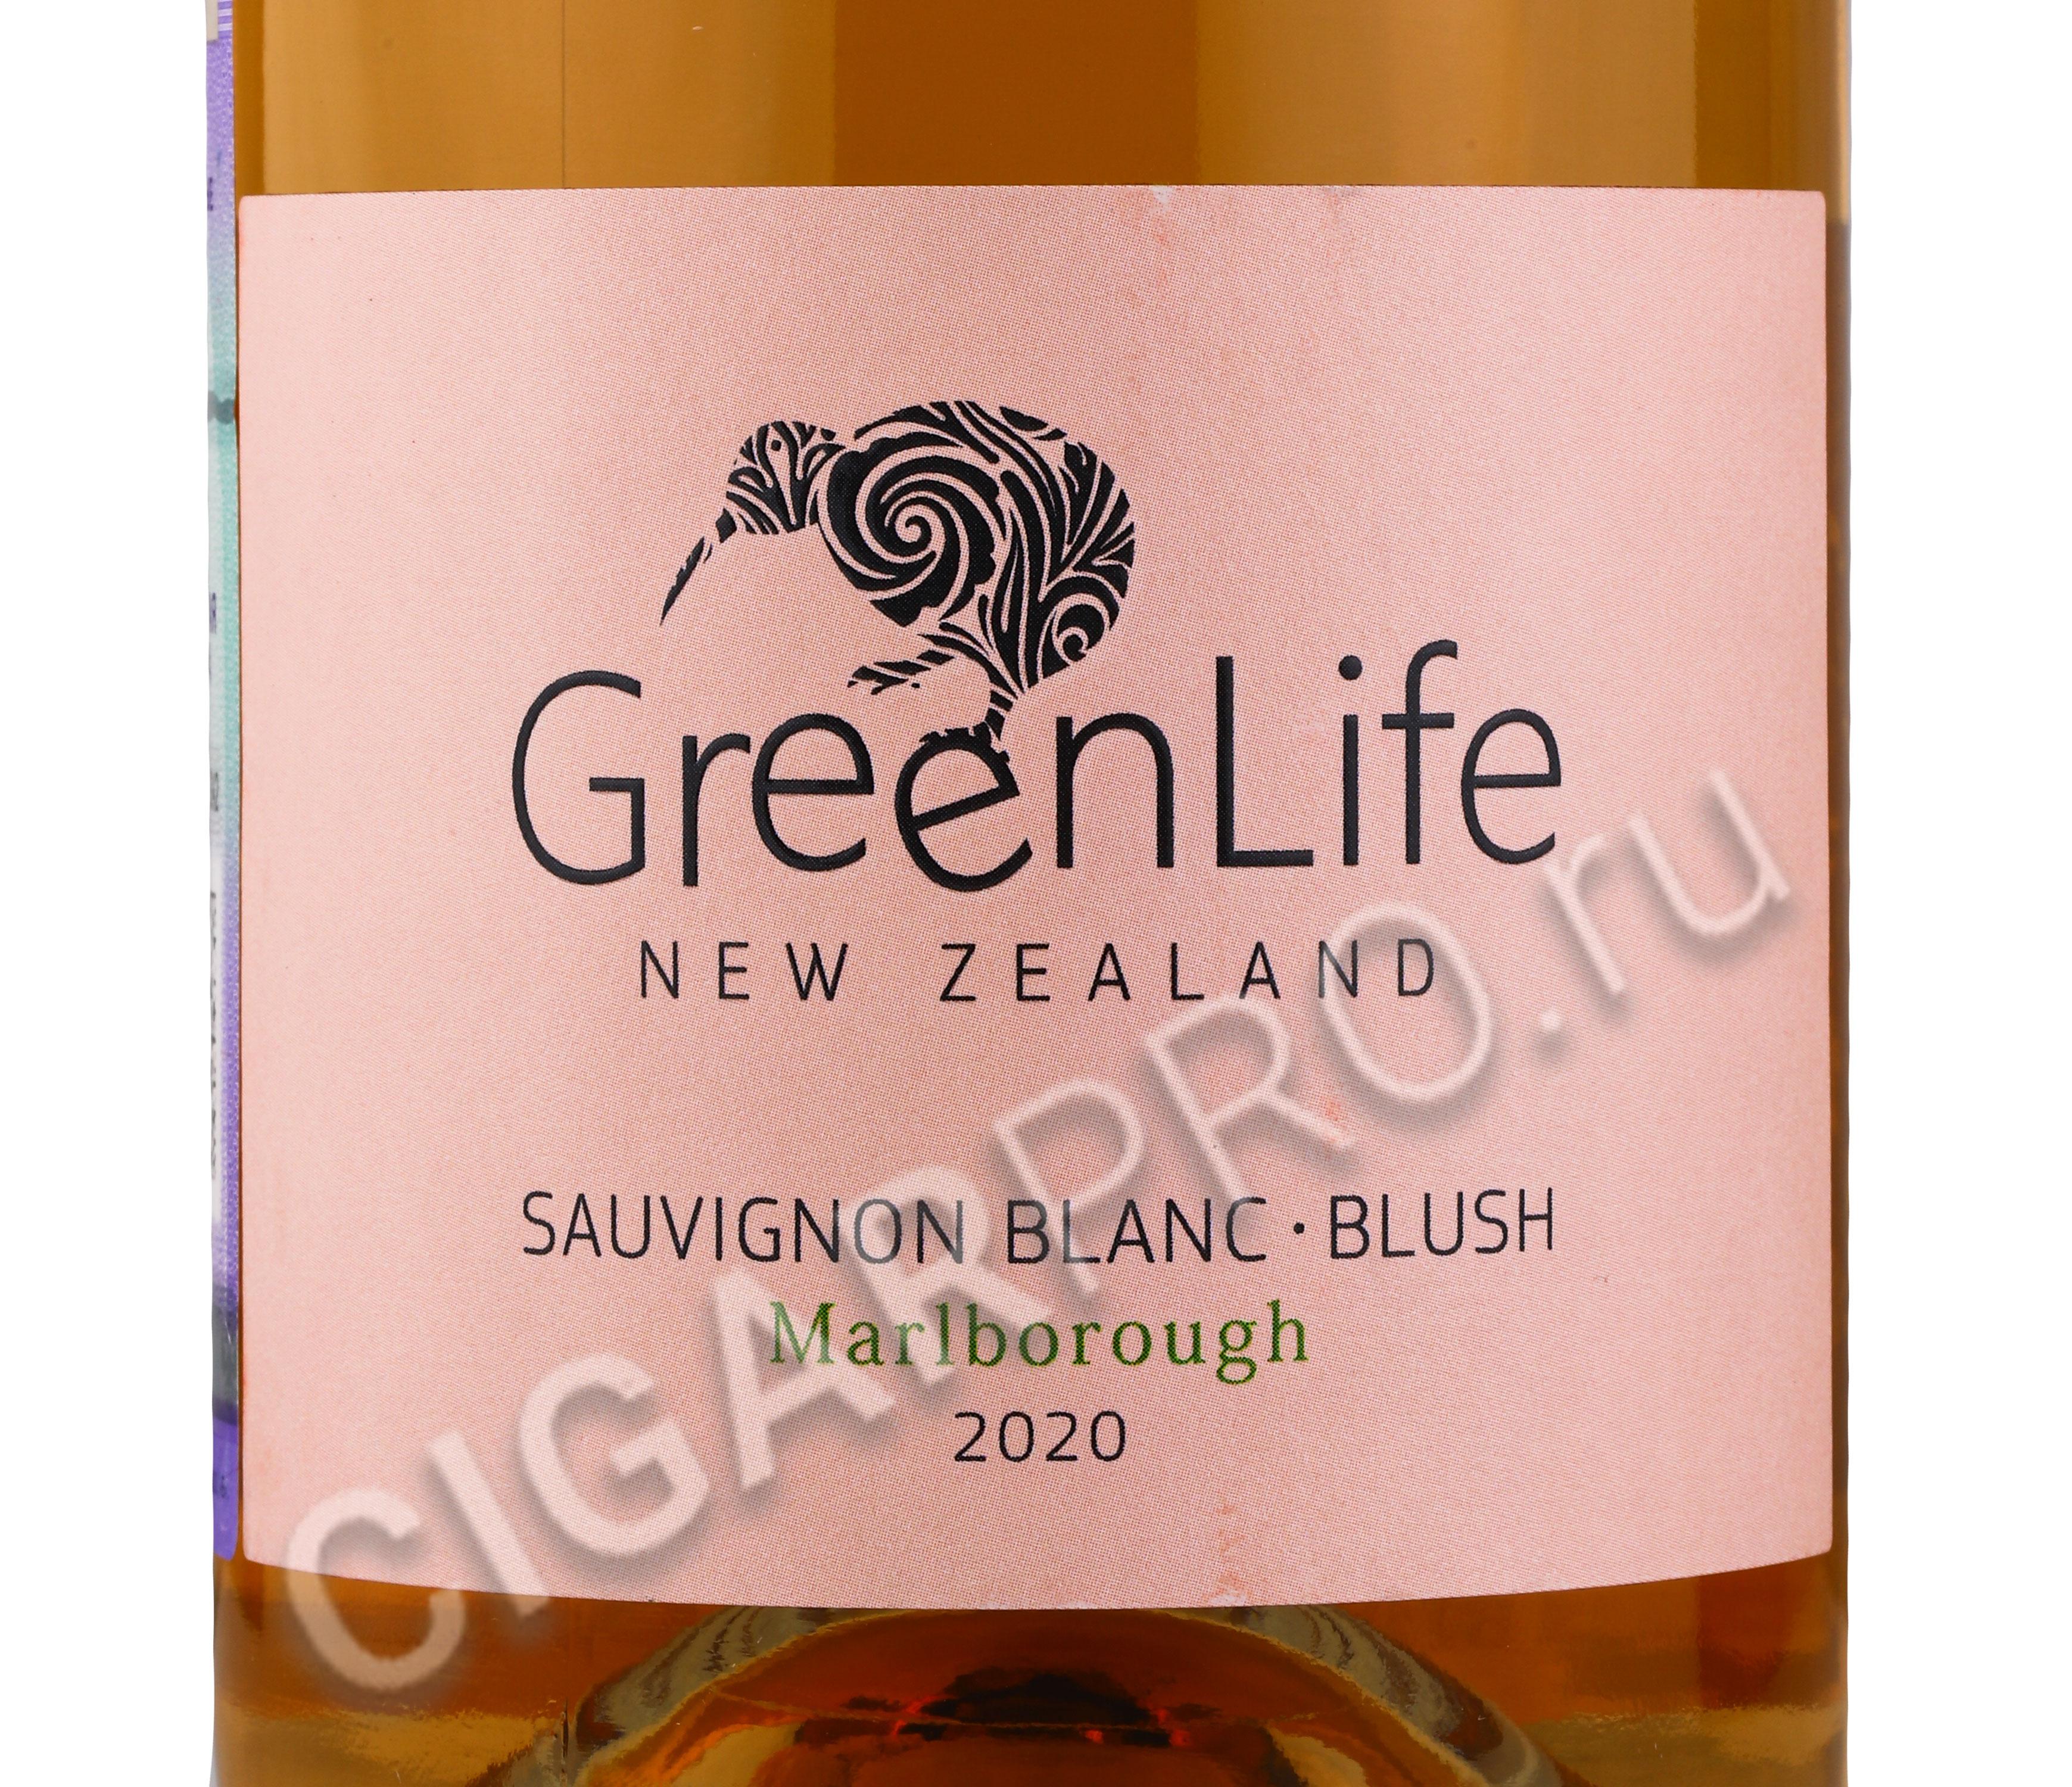 Green life sauvignon. Green Life вино Sauvignon Blanc. Greenlife Sauvignon Blanc. Грин лайф Совиньон Блан розовое. Гринлайф новая Зеландия вино.